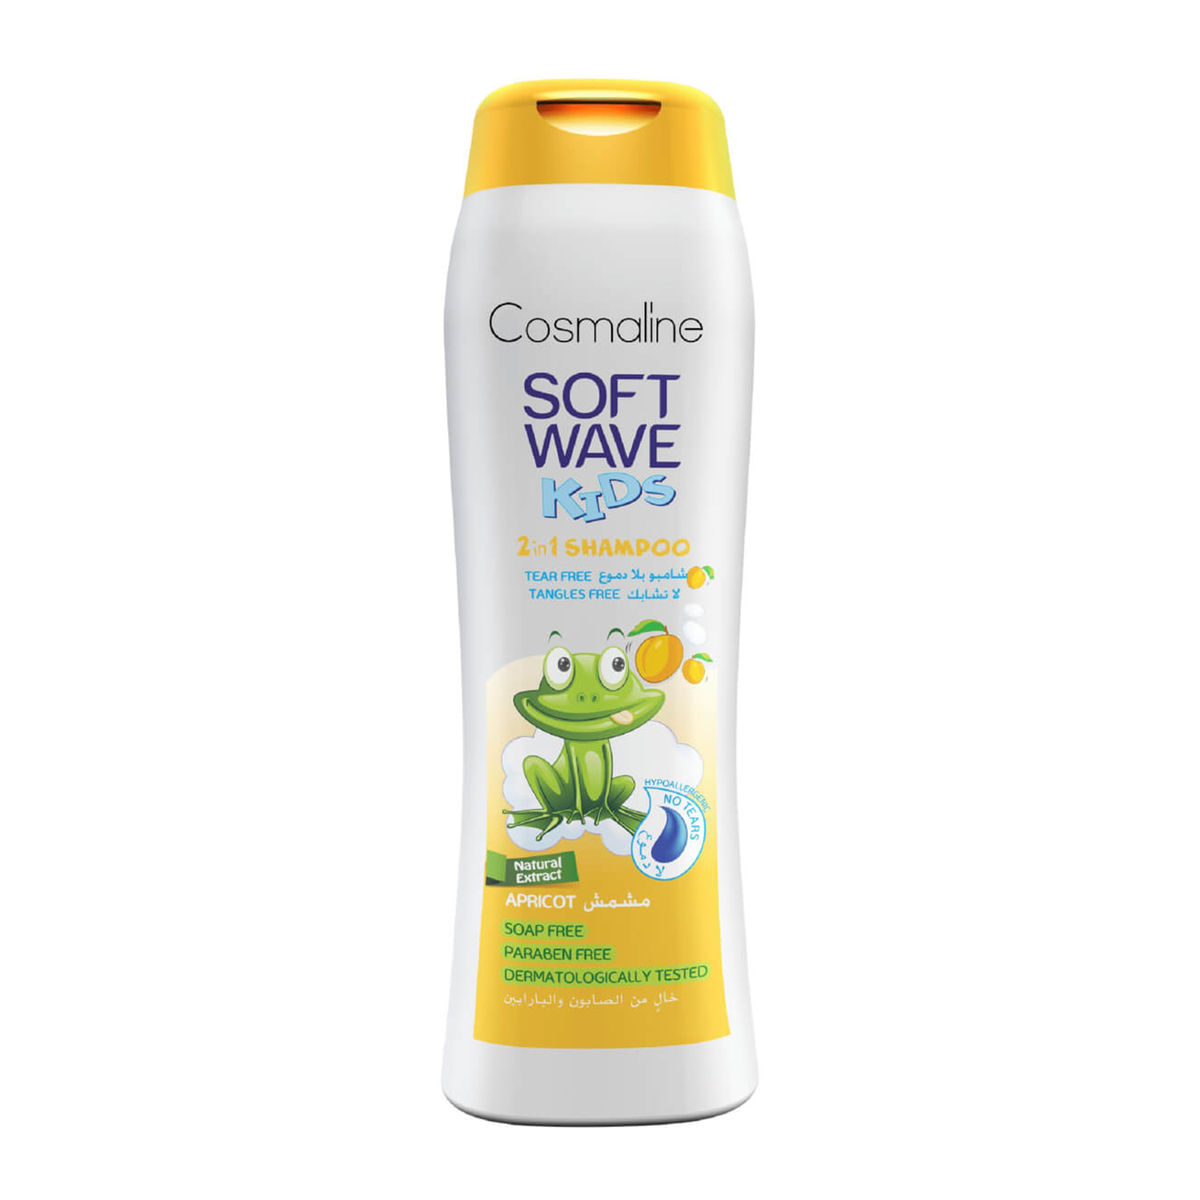 Cosmaline Soft Wave Apricot 2in1 Kids Shampoo 400ml